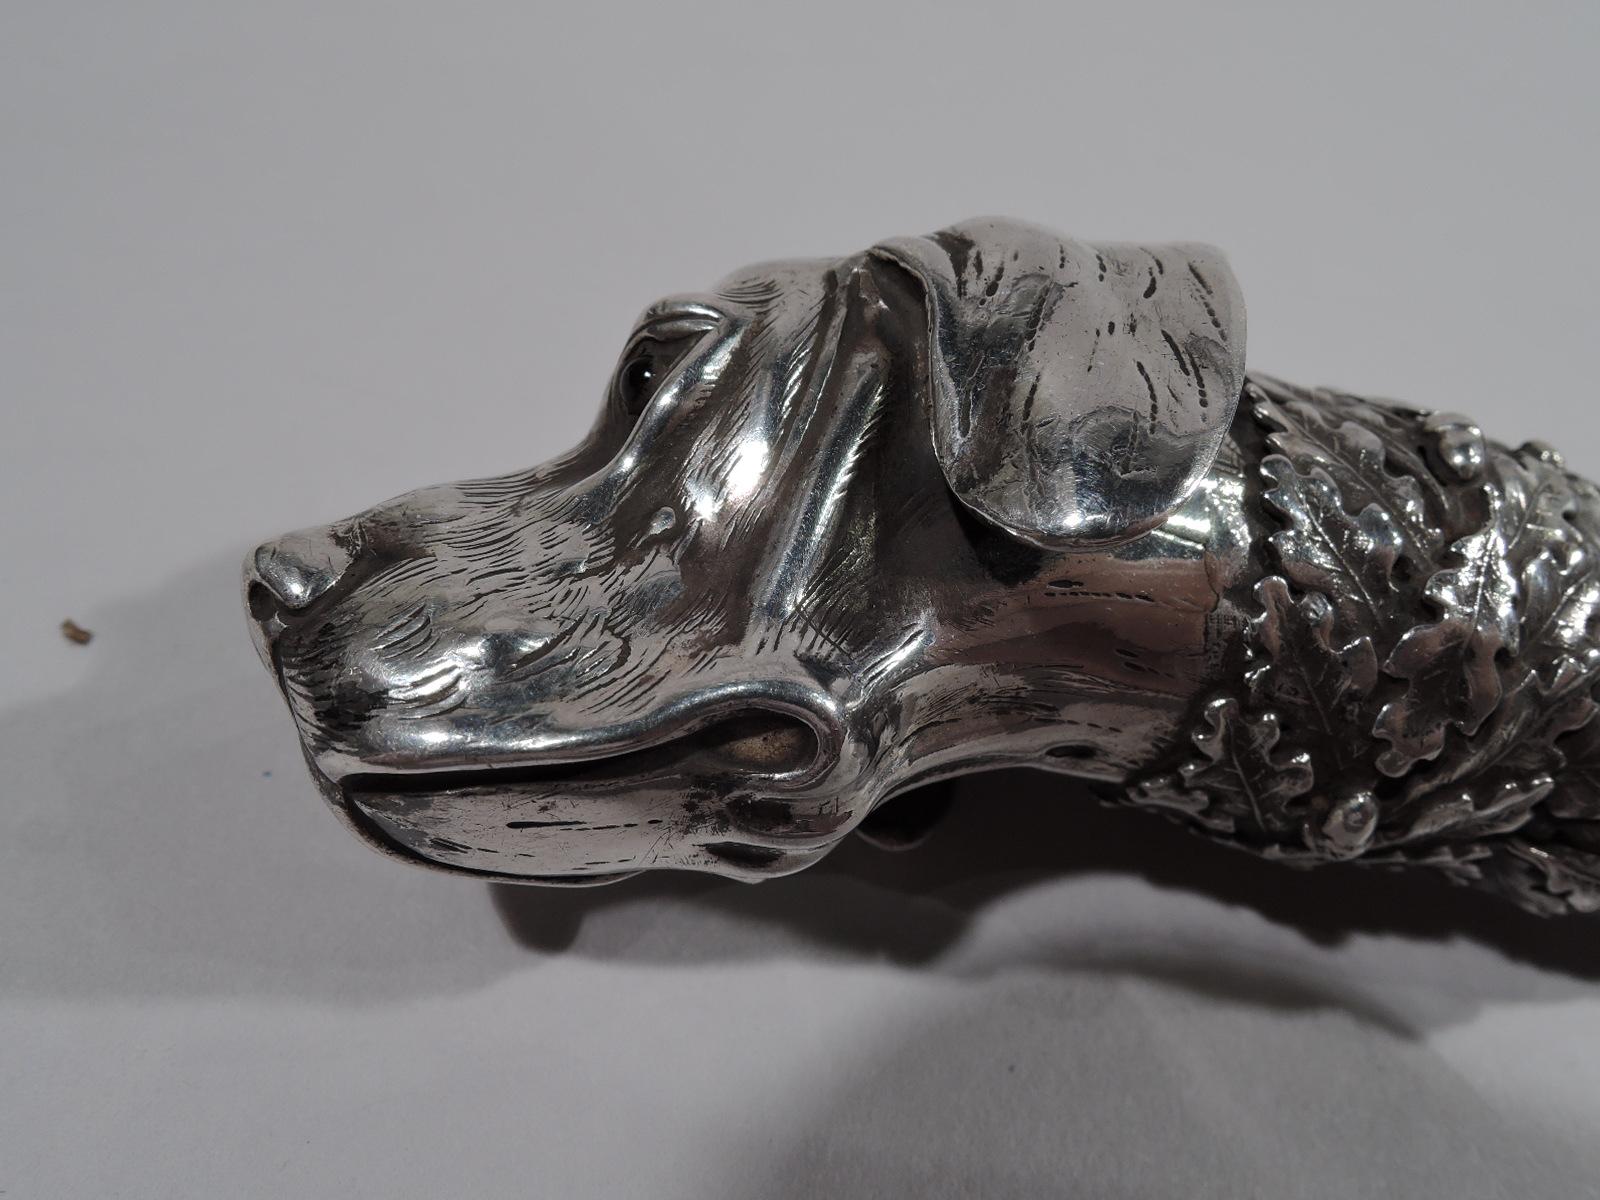 Victorian Antique Austrian Silver Cigar Cutter with Floppy-Eared Hound’s Head